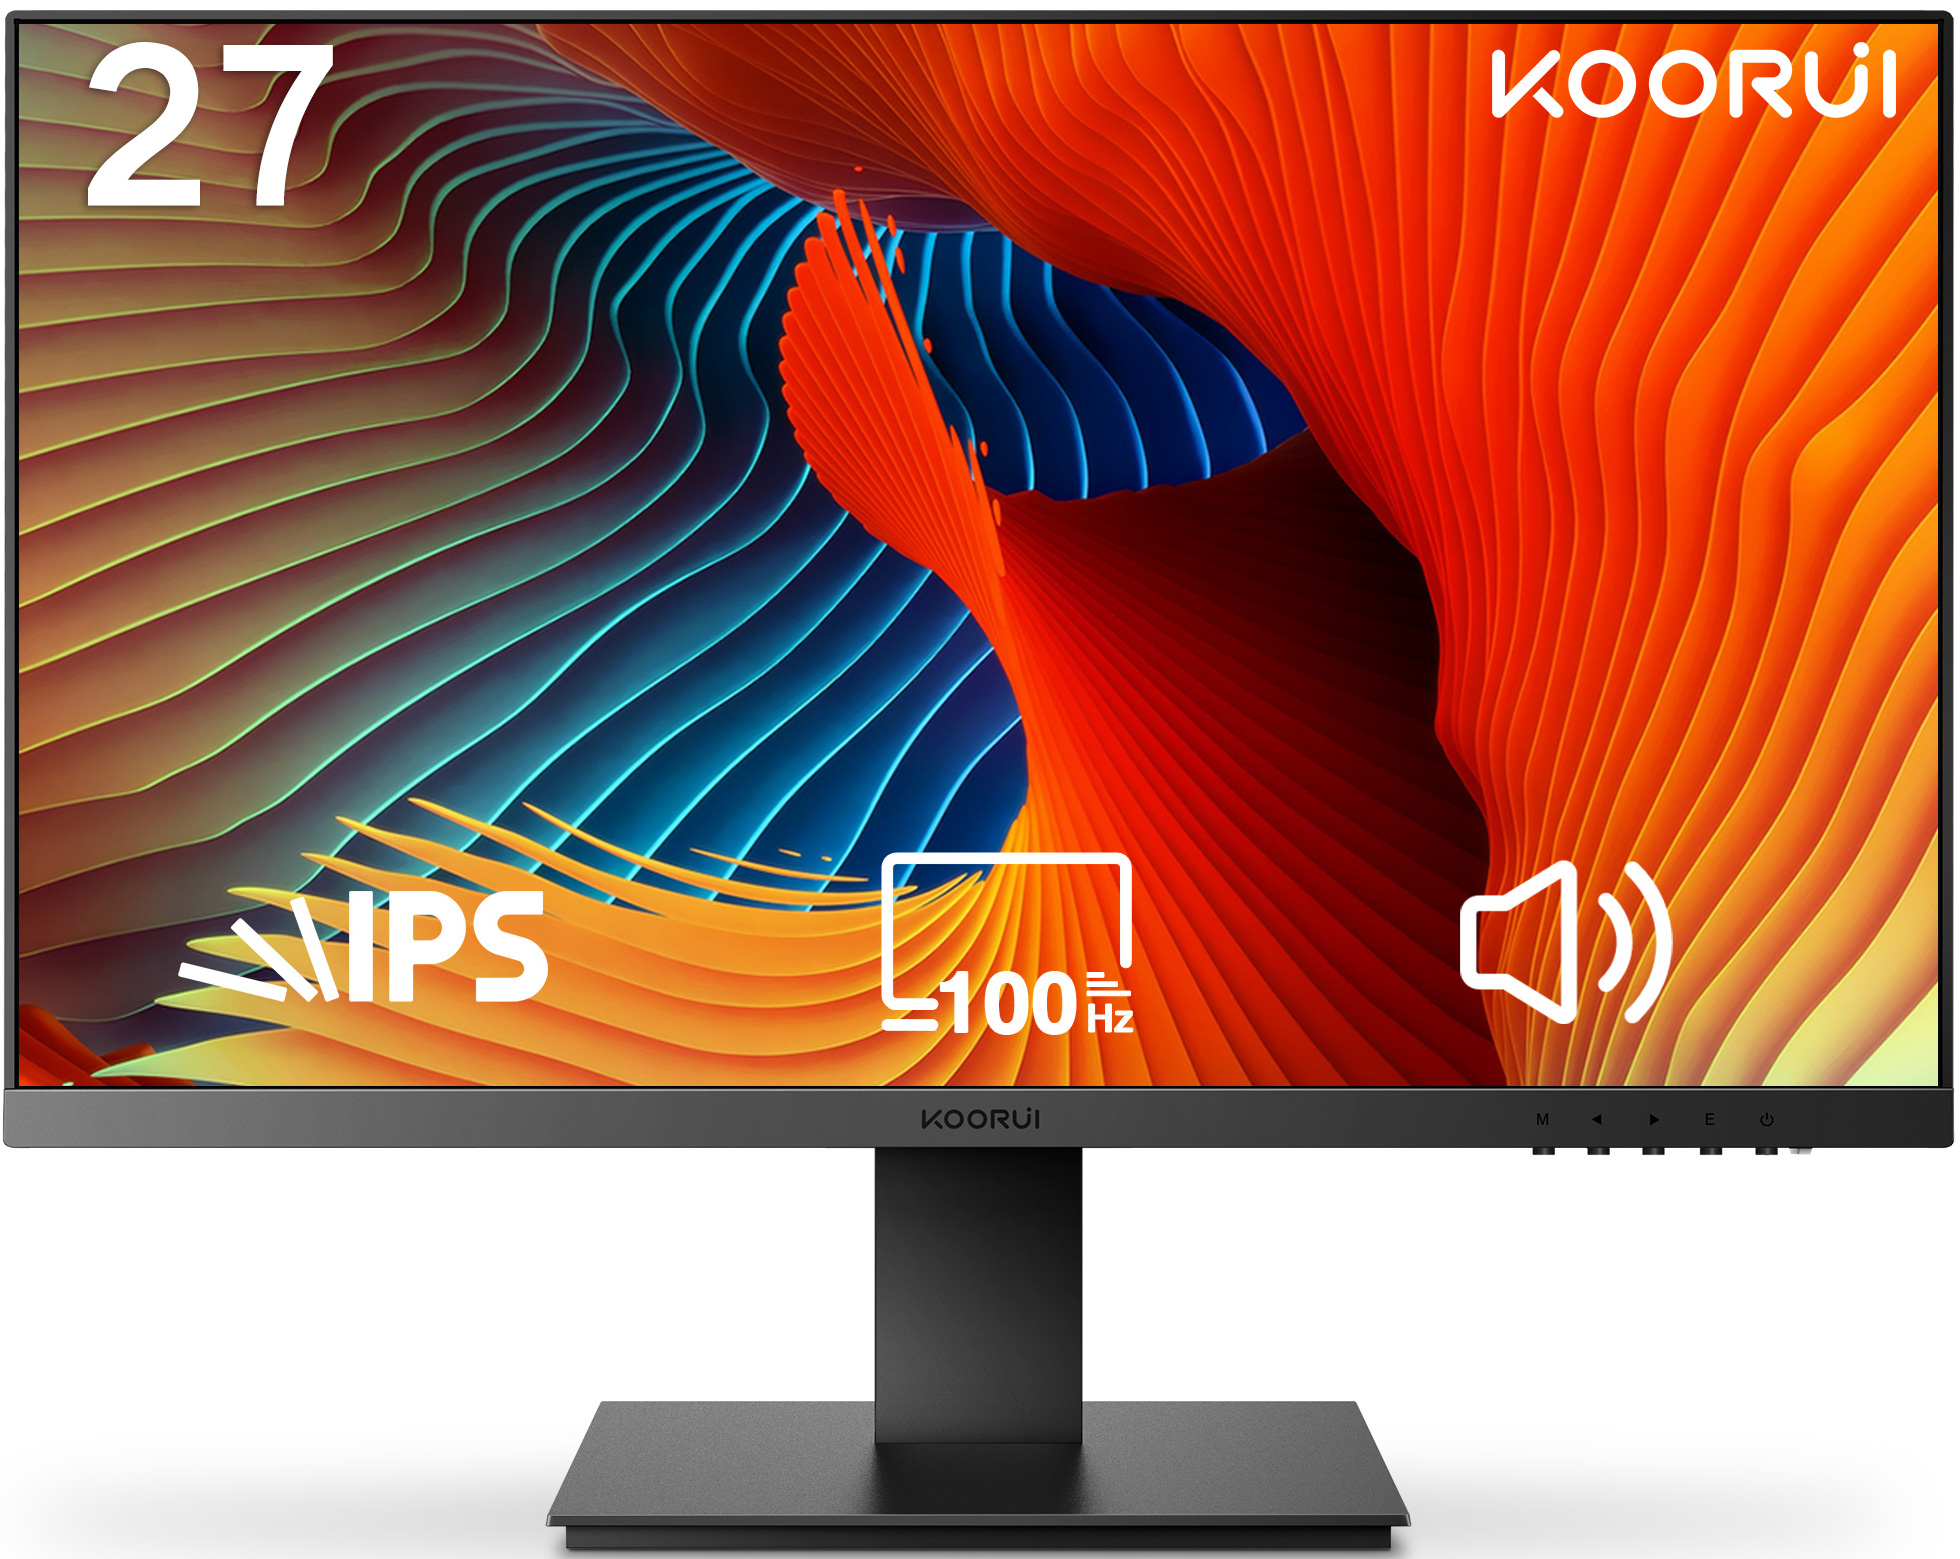 KOORUI 27 Inch 100Hz IPS Computer Monitor -FHD 1080P PC Desktop Gaming  Monitors for Computer,Built-in speakers,Eye Care,N02-Koorui